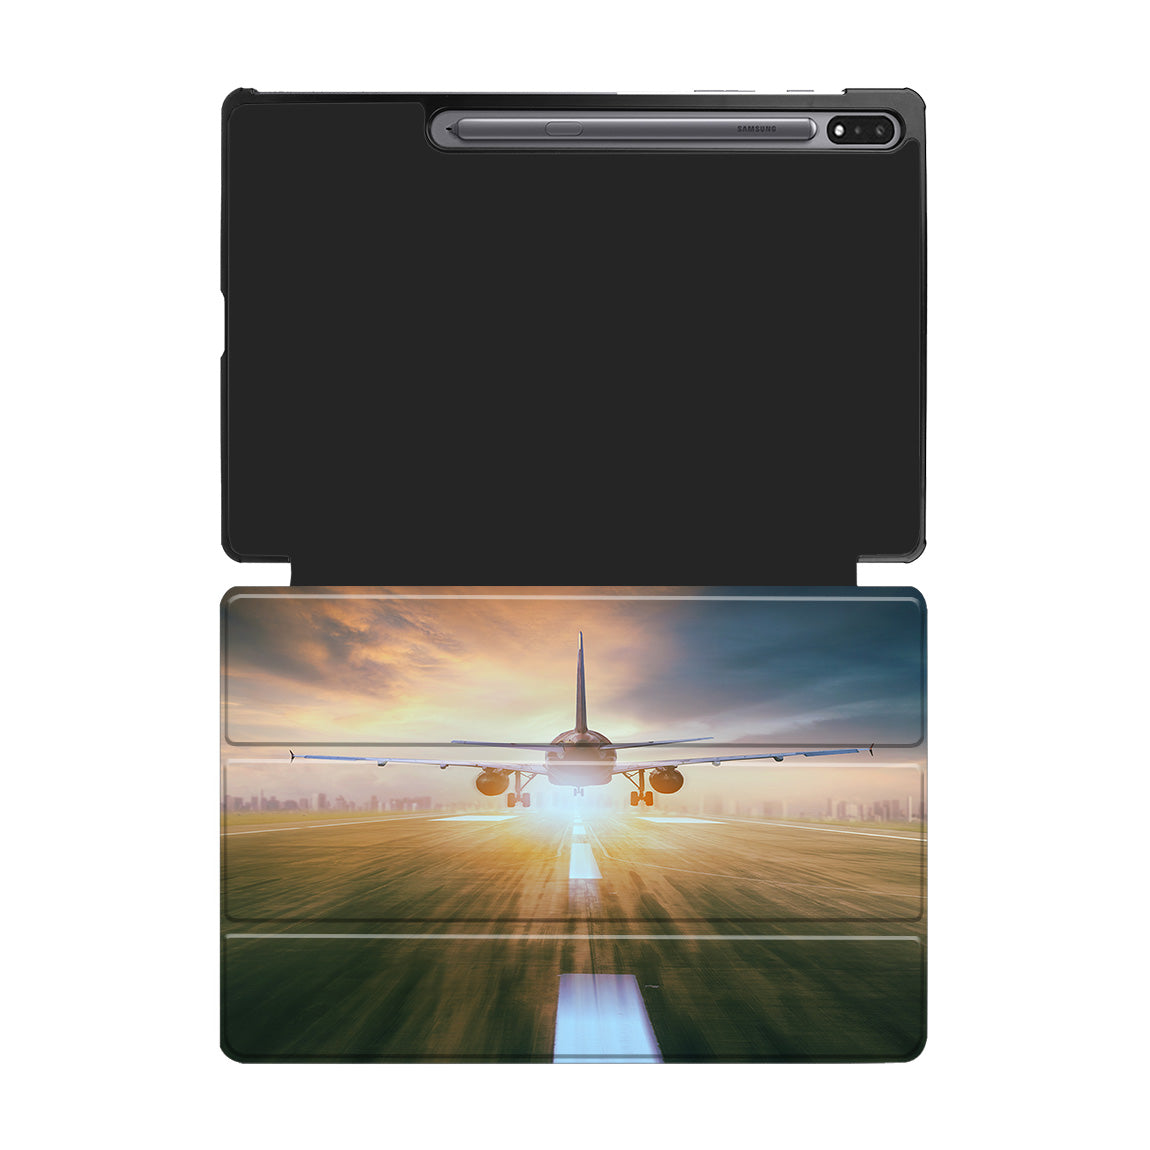 Airplane Flying Over Runway Designed Samsung Tablet Cases